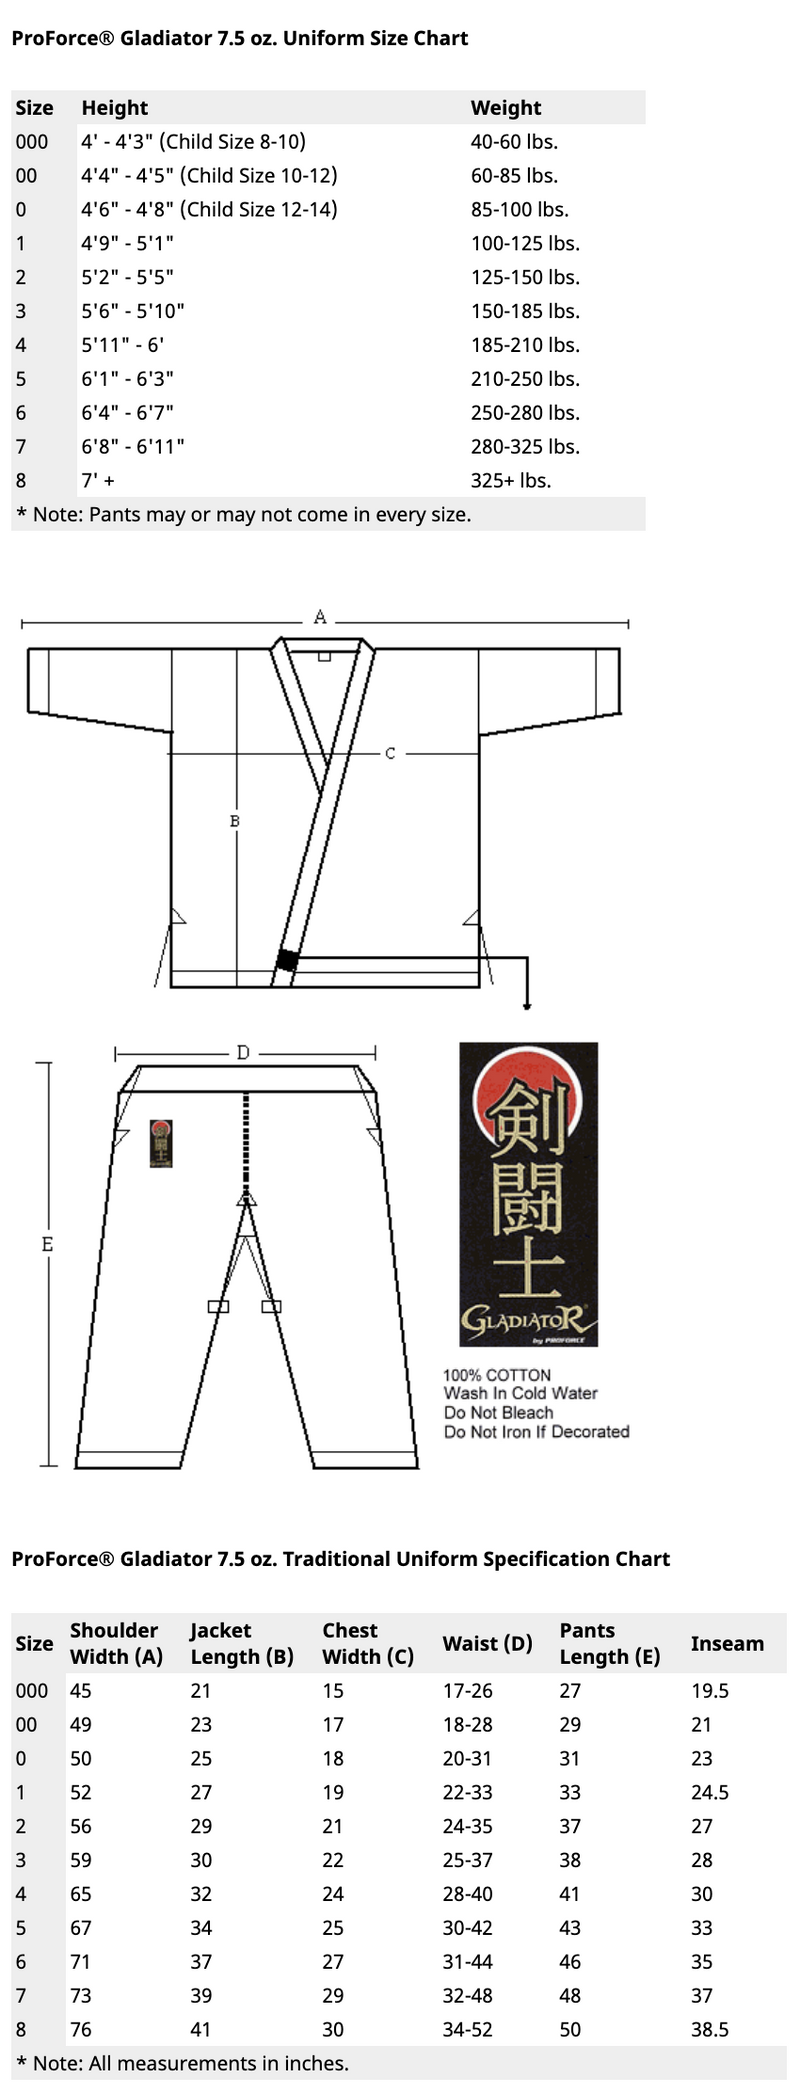 ProForce® 7.5 oz. Karate Uniform (Elastic Drawstring) - 55/45 Blend